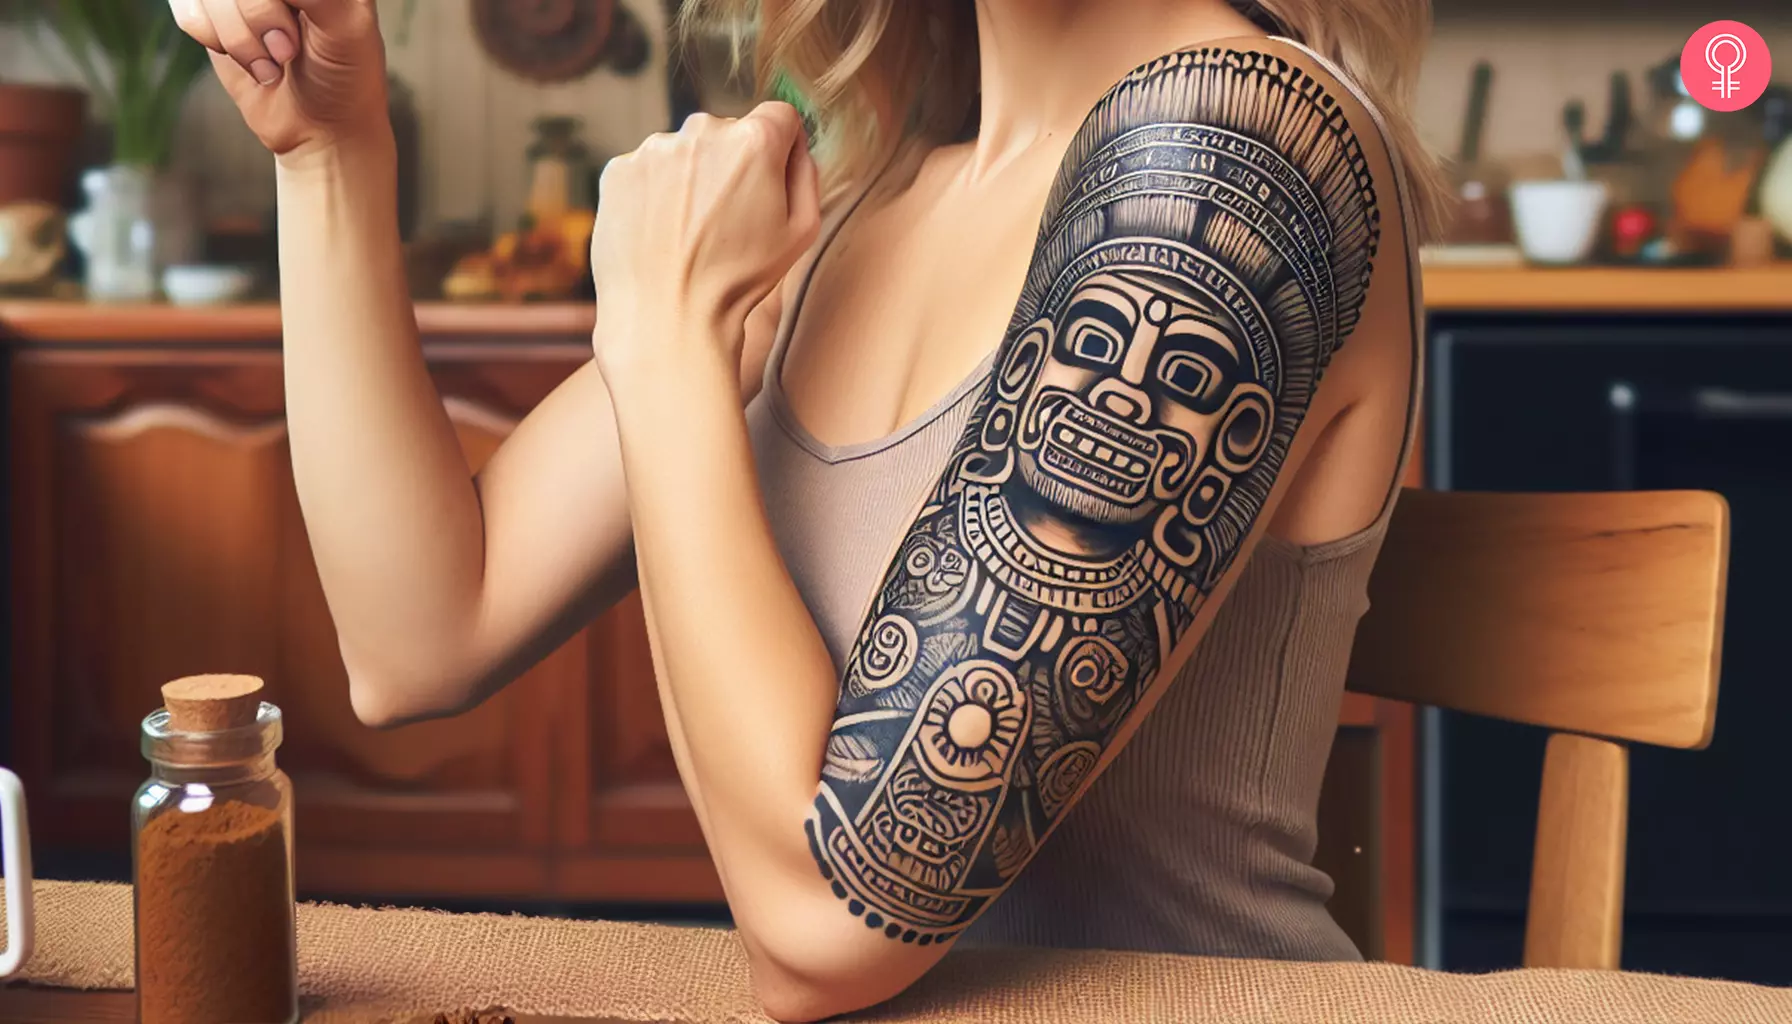 A Guatemalan Mayan warrior tattoo on a woman’s upper arm